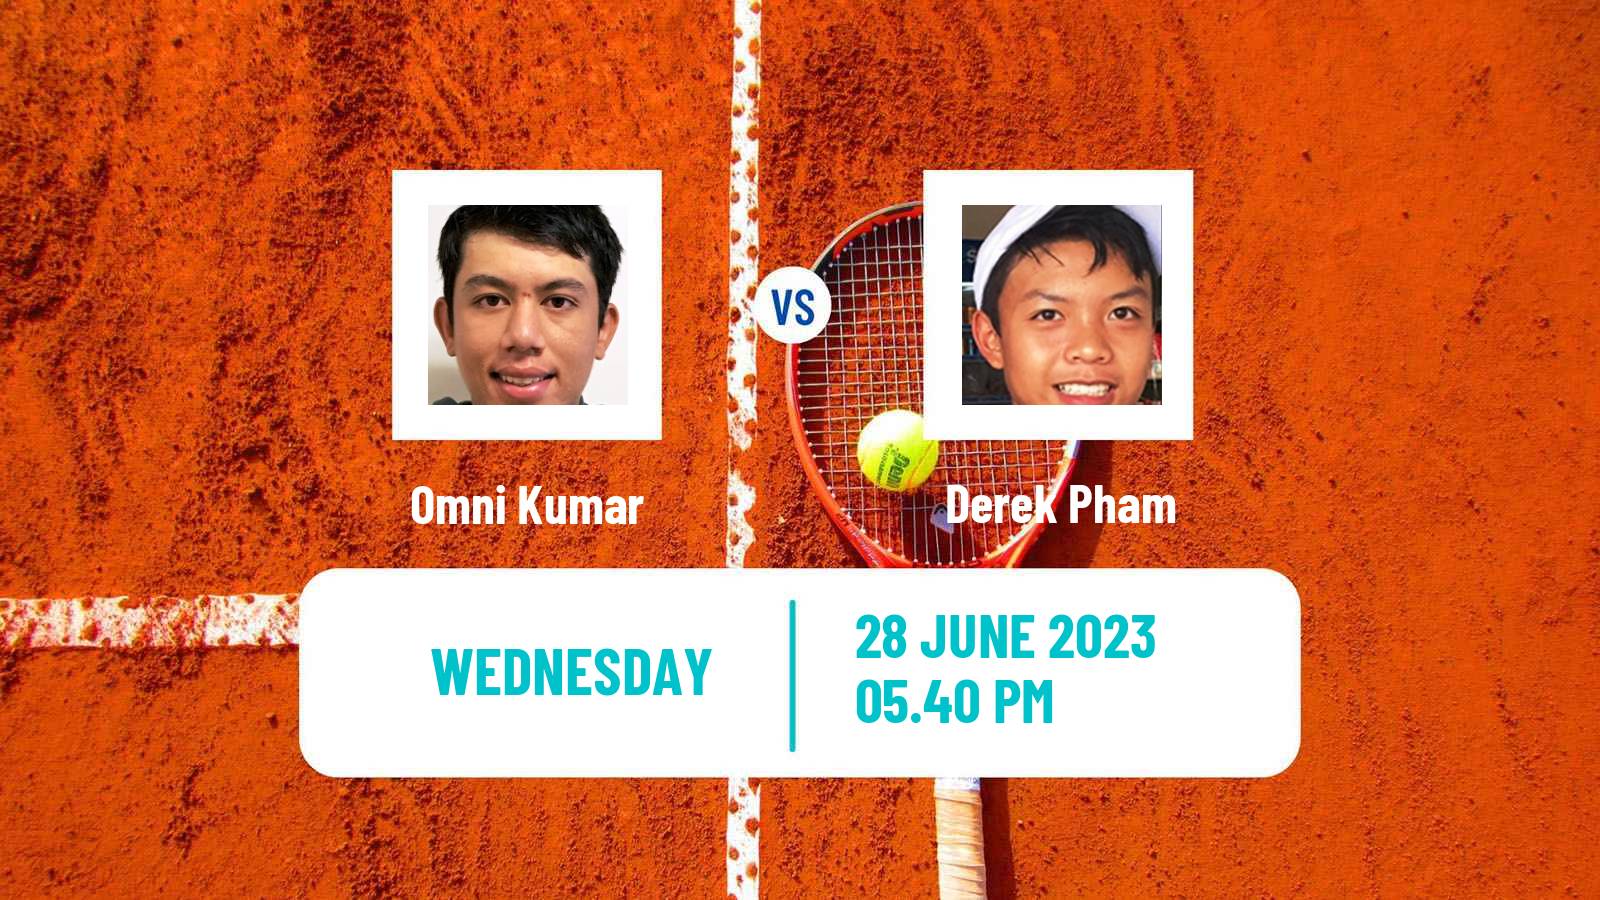 Tennis ITF M15 Irvine Men Omni Kumar - Derek Pham